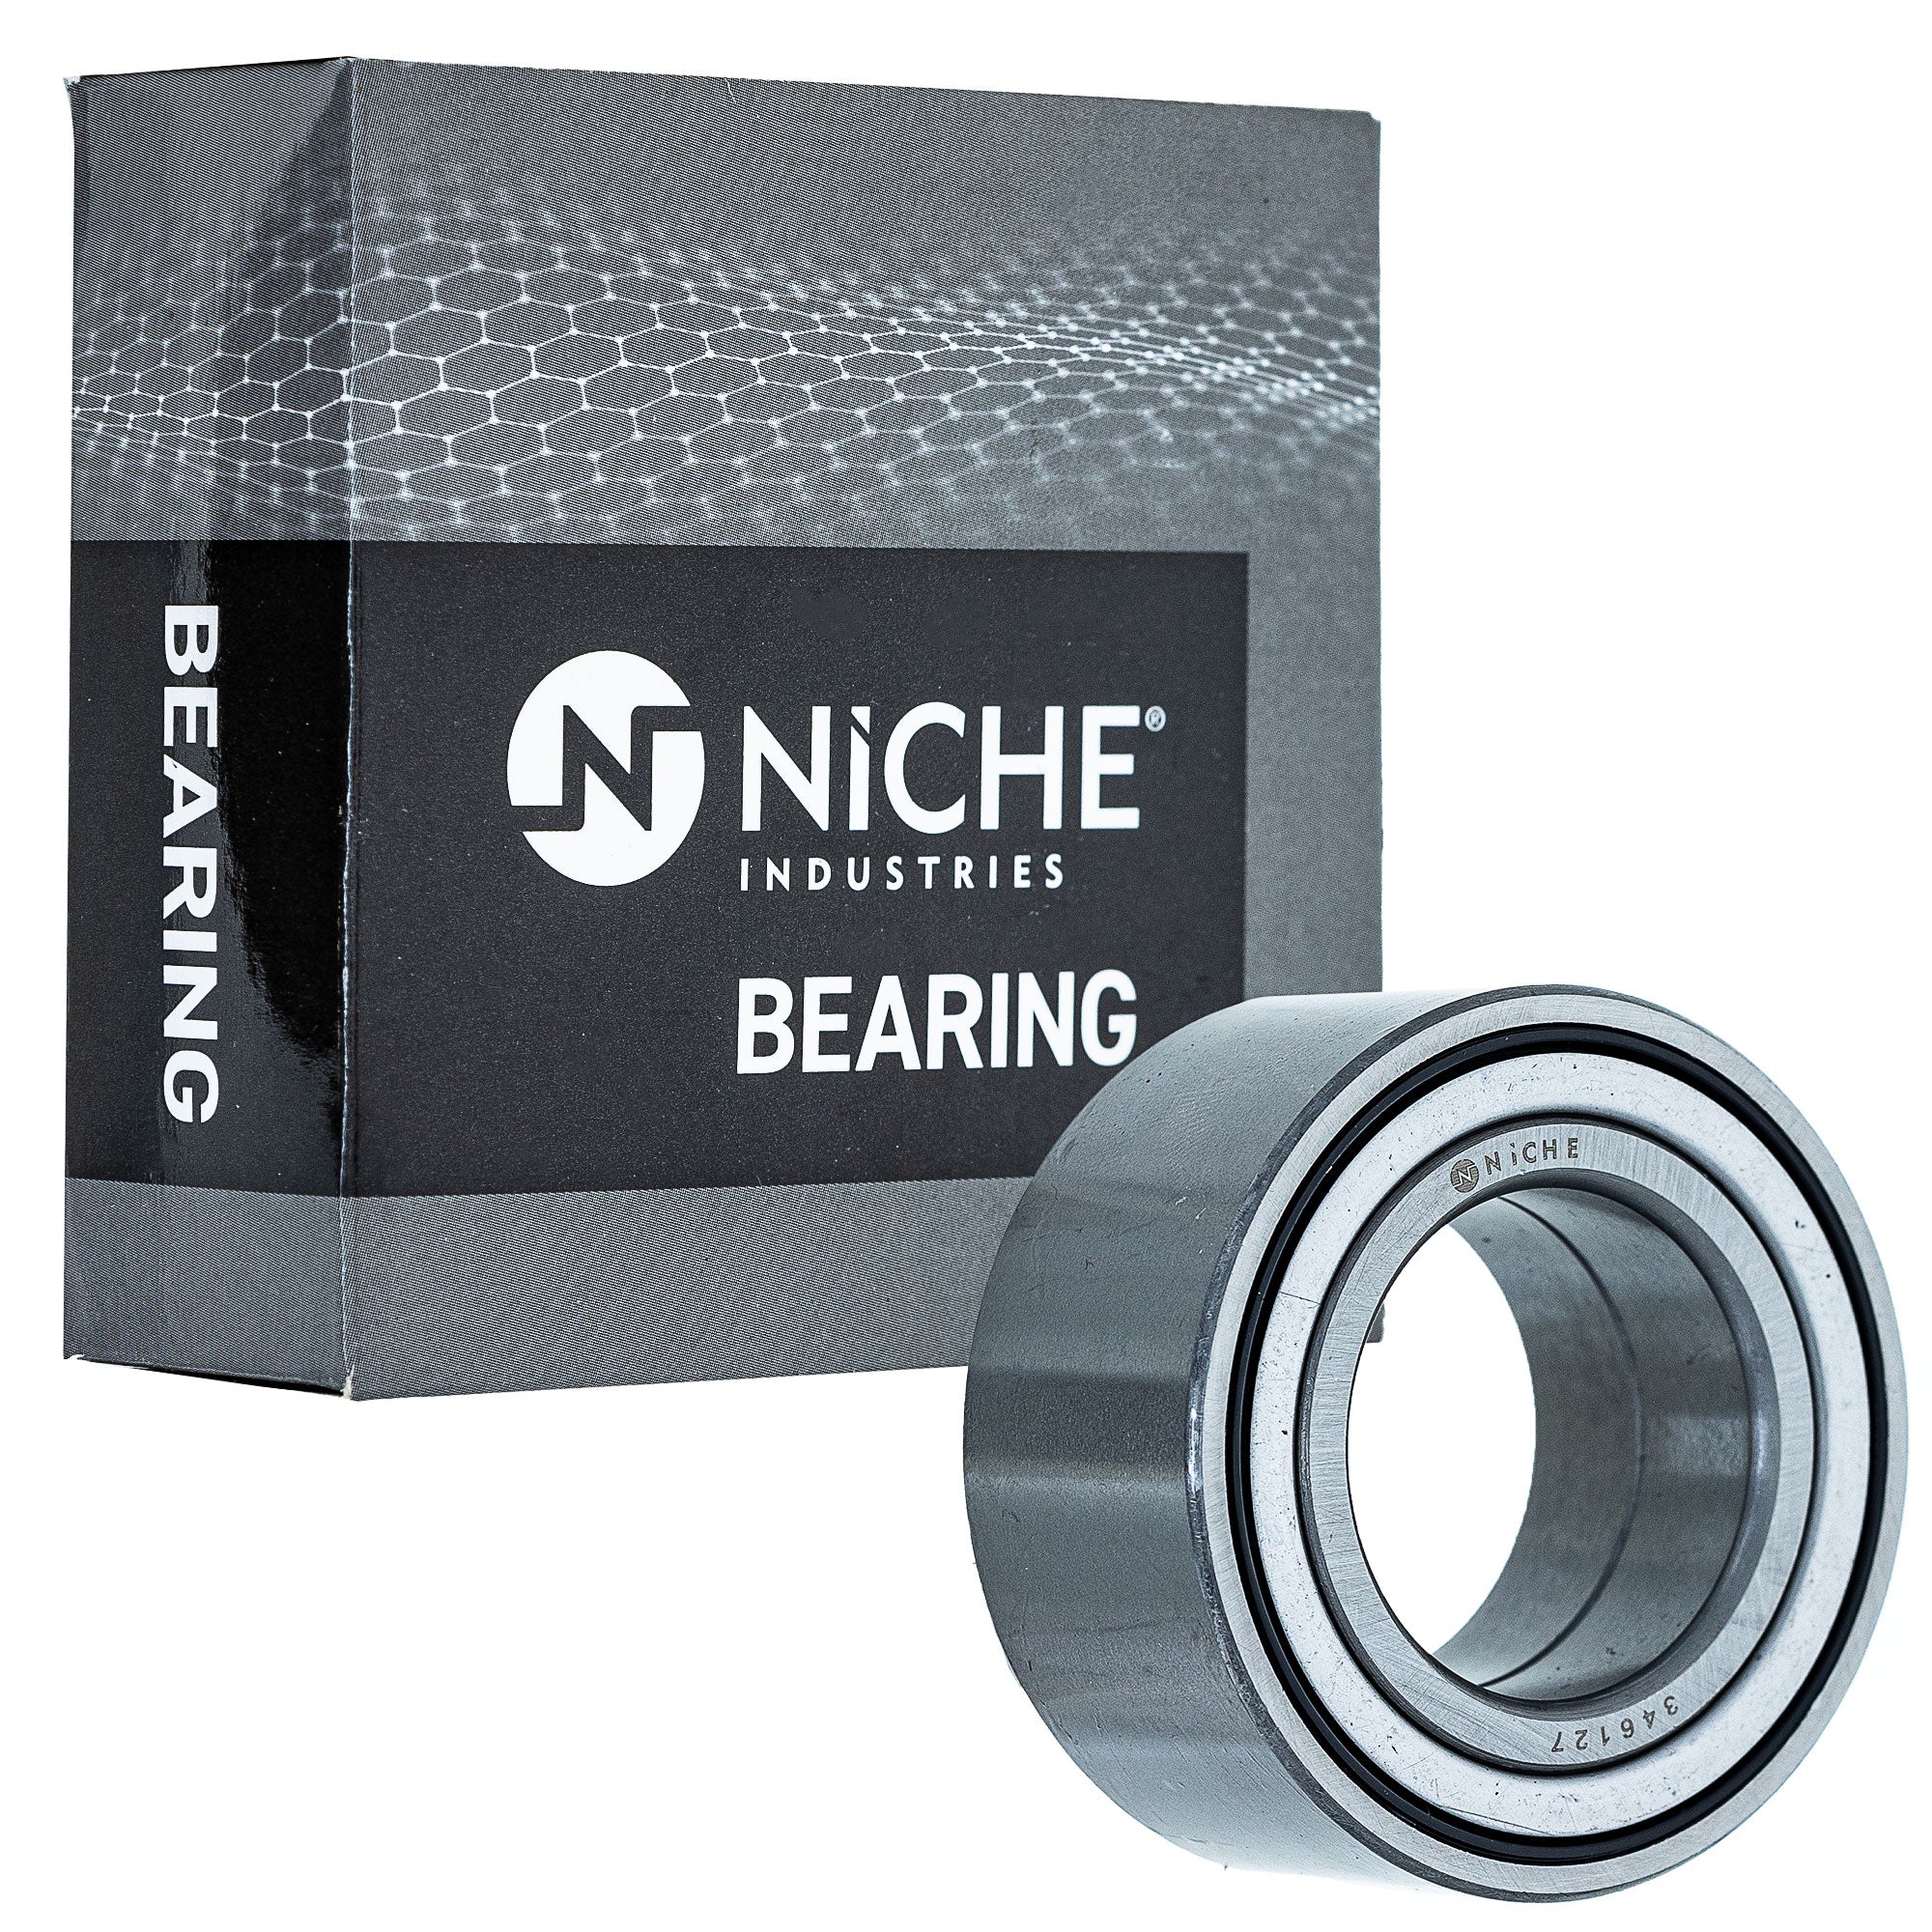 NICHE 519-CBB2293R Bearing for zOTHER TRX700 FourTrax